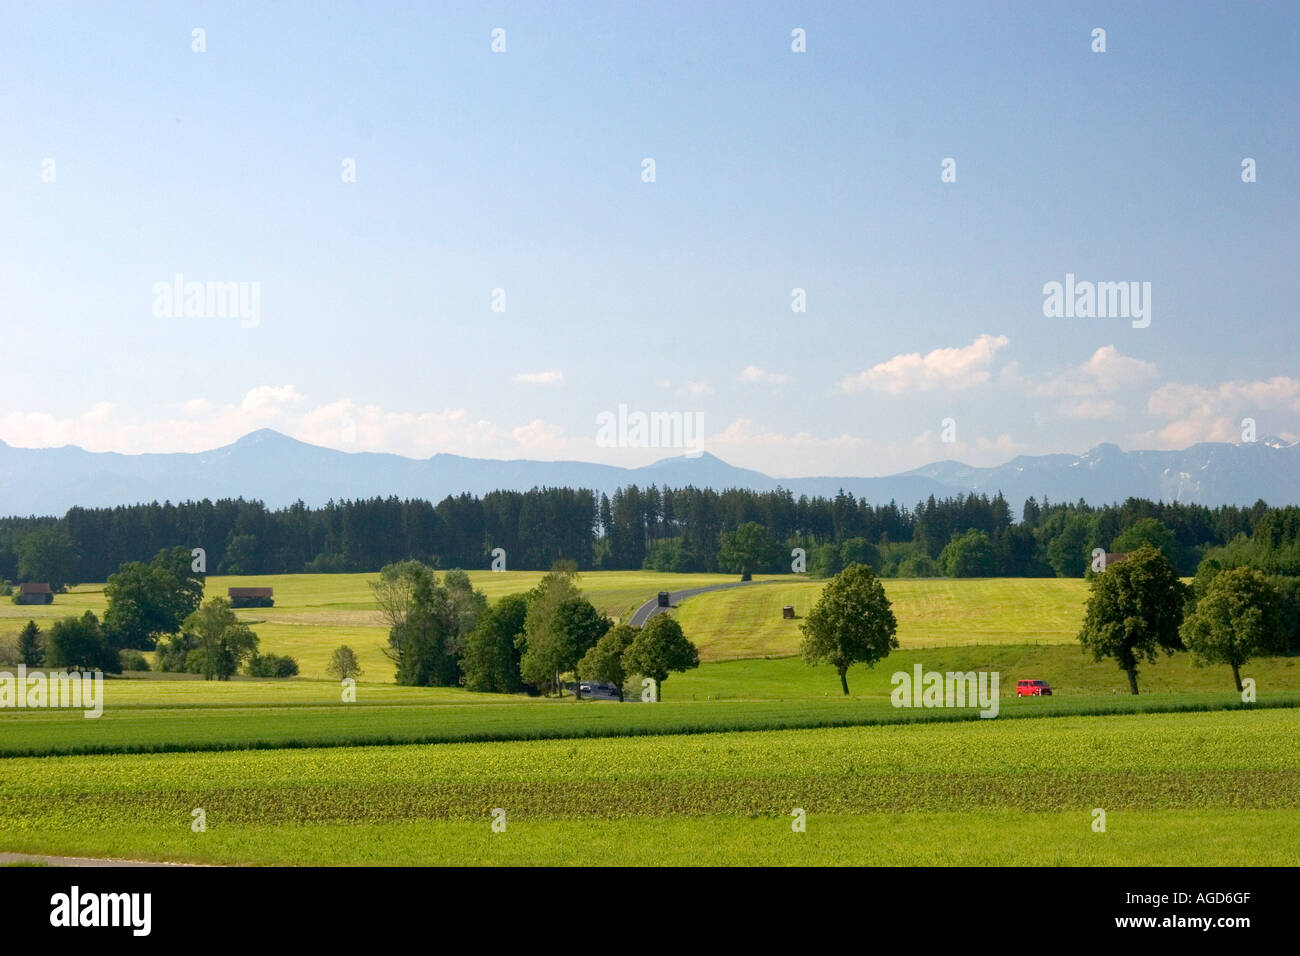 Austrian Alps and green fields near Weilheim in Southern Germany. Stock Photo